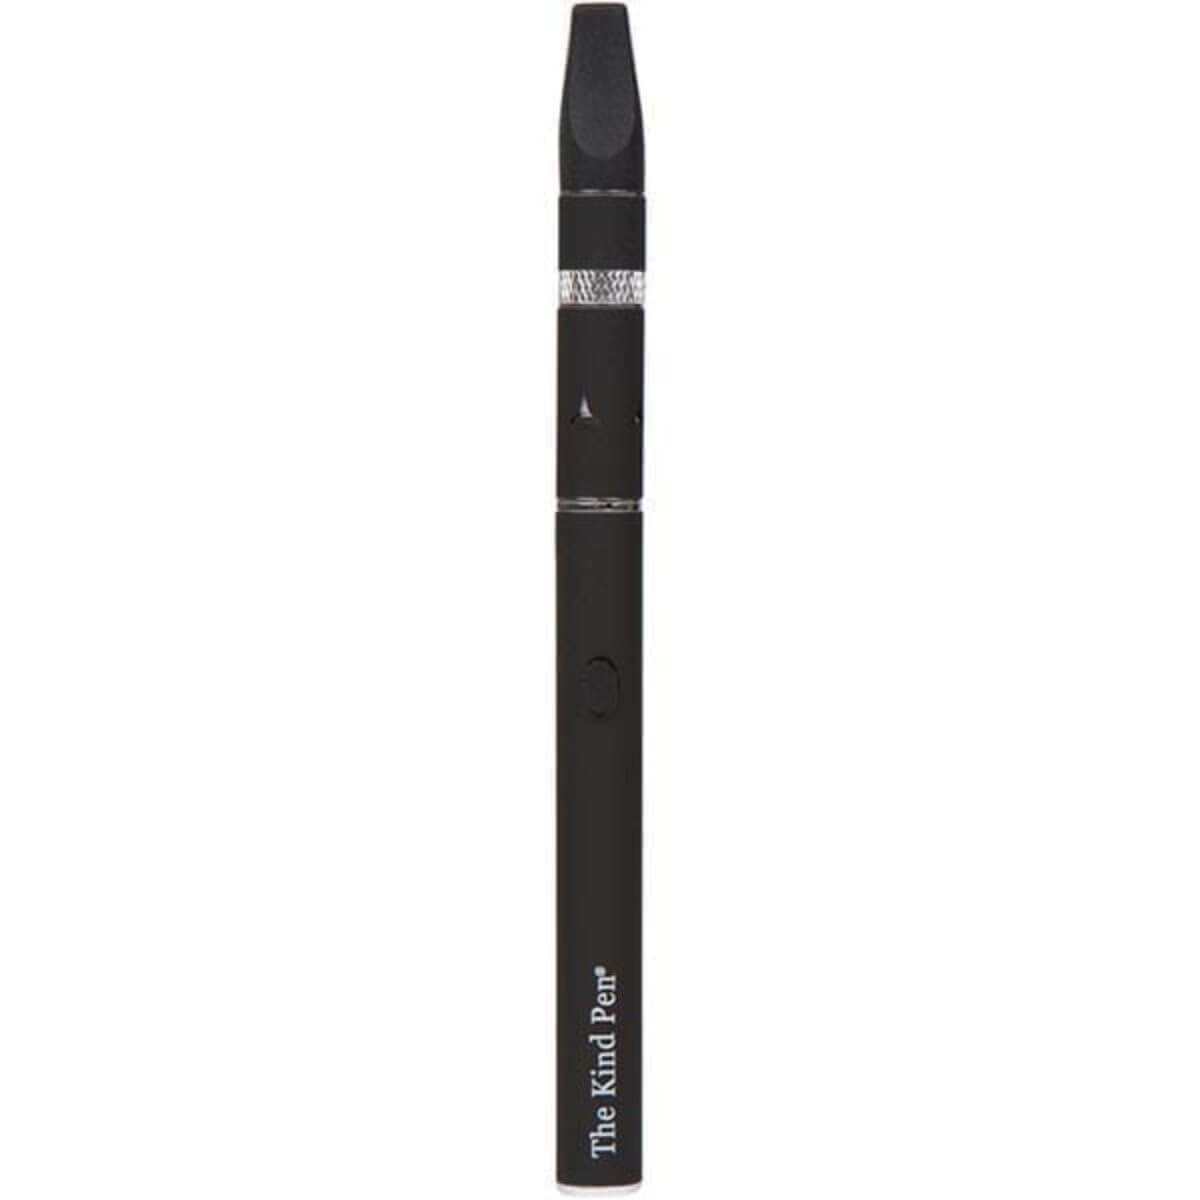 The Kind Pen Wax CBD Vape Pen image1